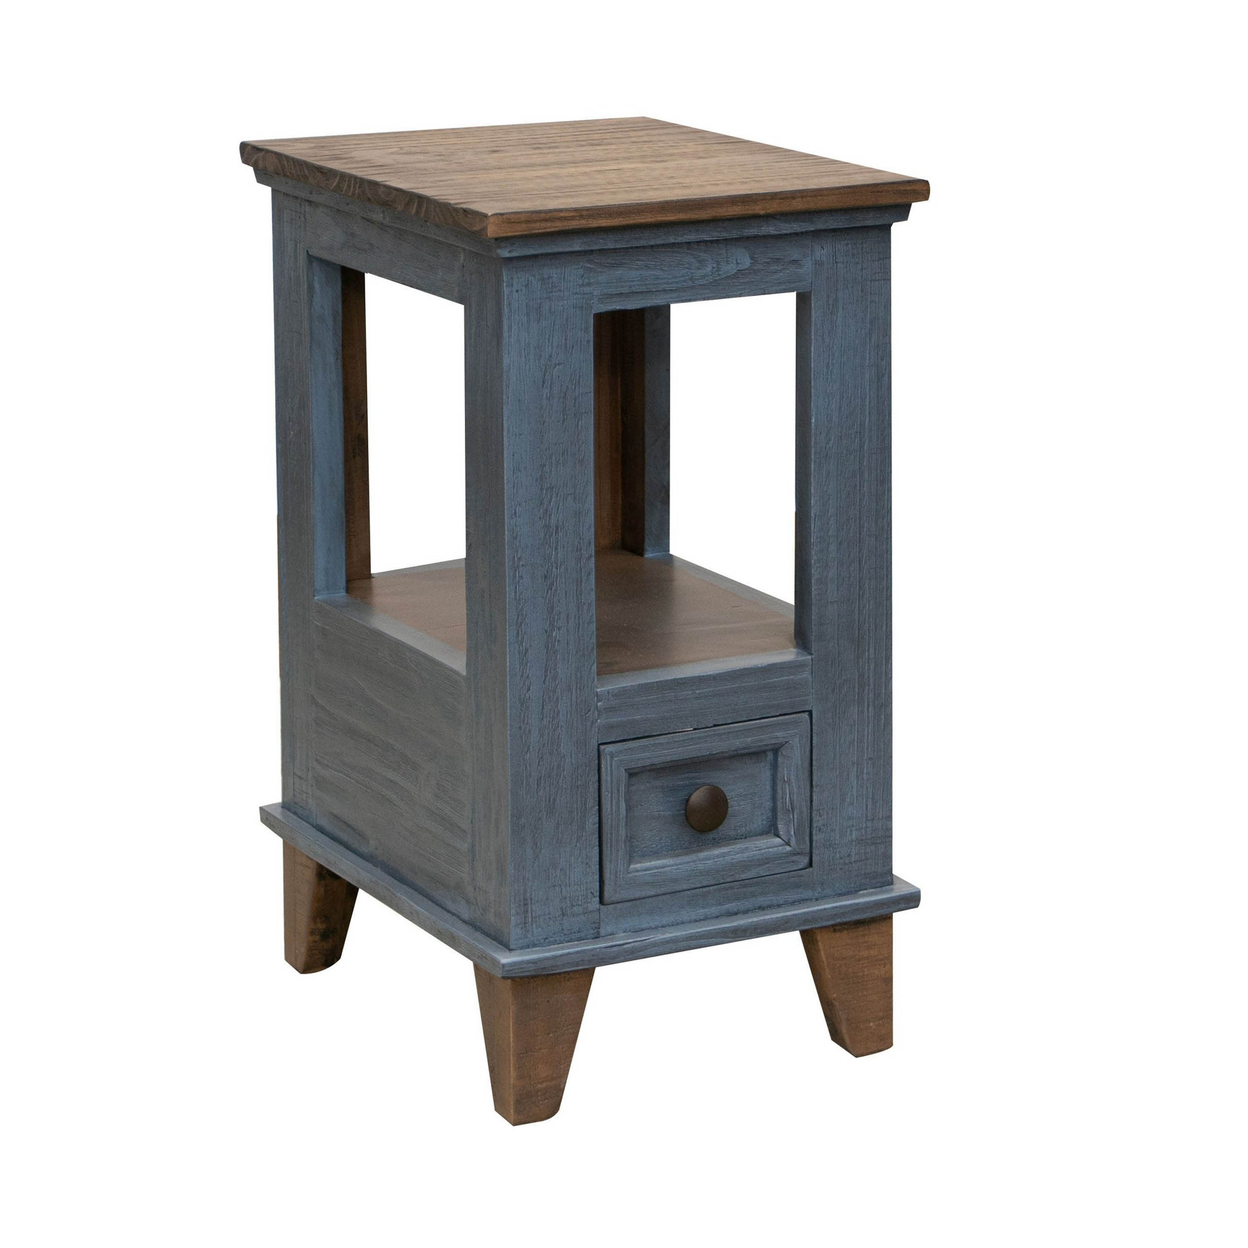 Rozy 26 Inch Chairside Table, Pine Wood, 1 Drawer, Open Shelf, Brown, Blue - Saltoro Sherpi